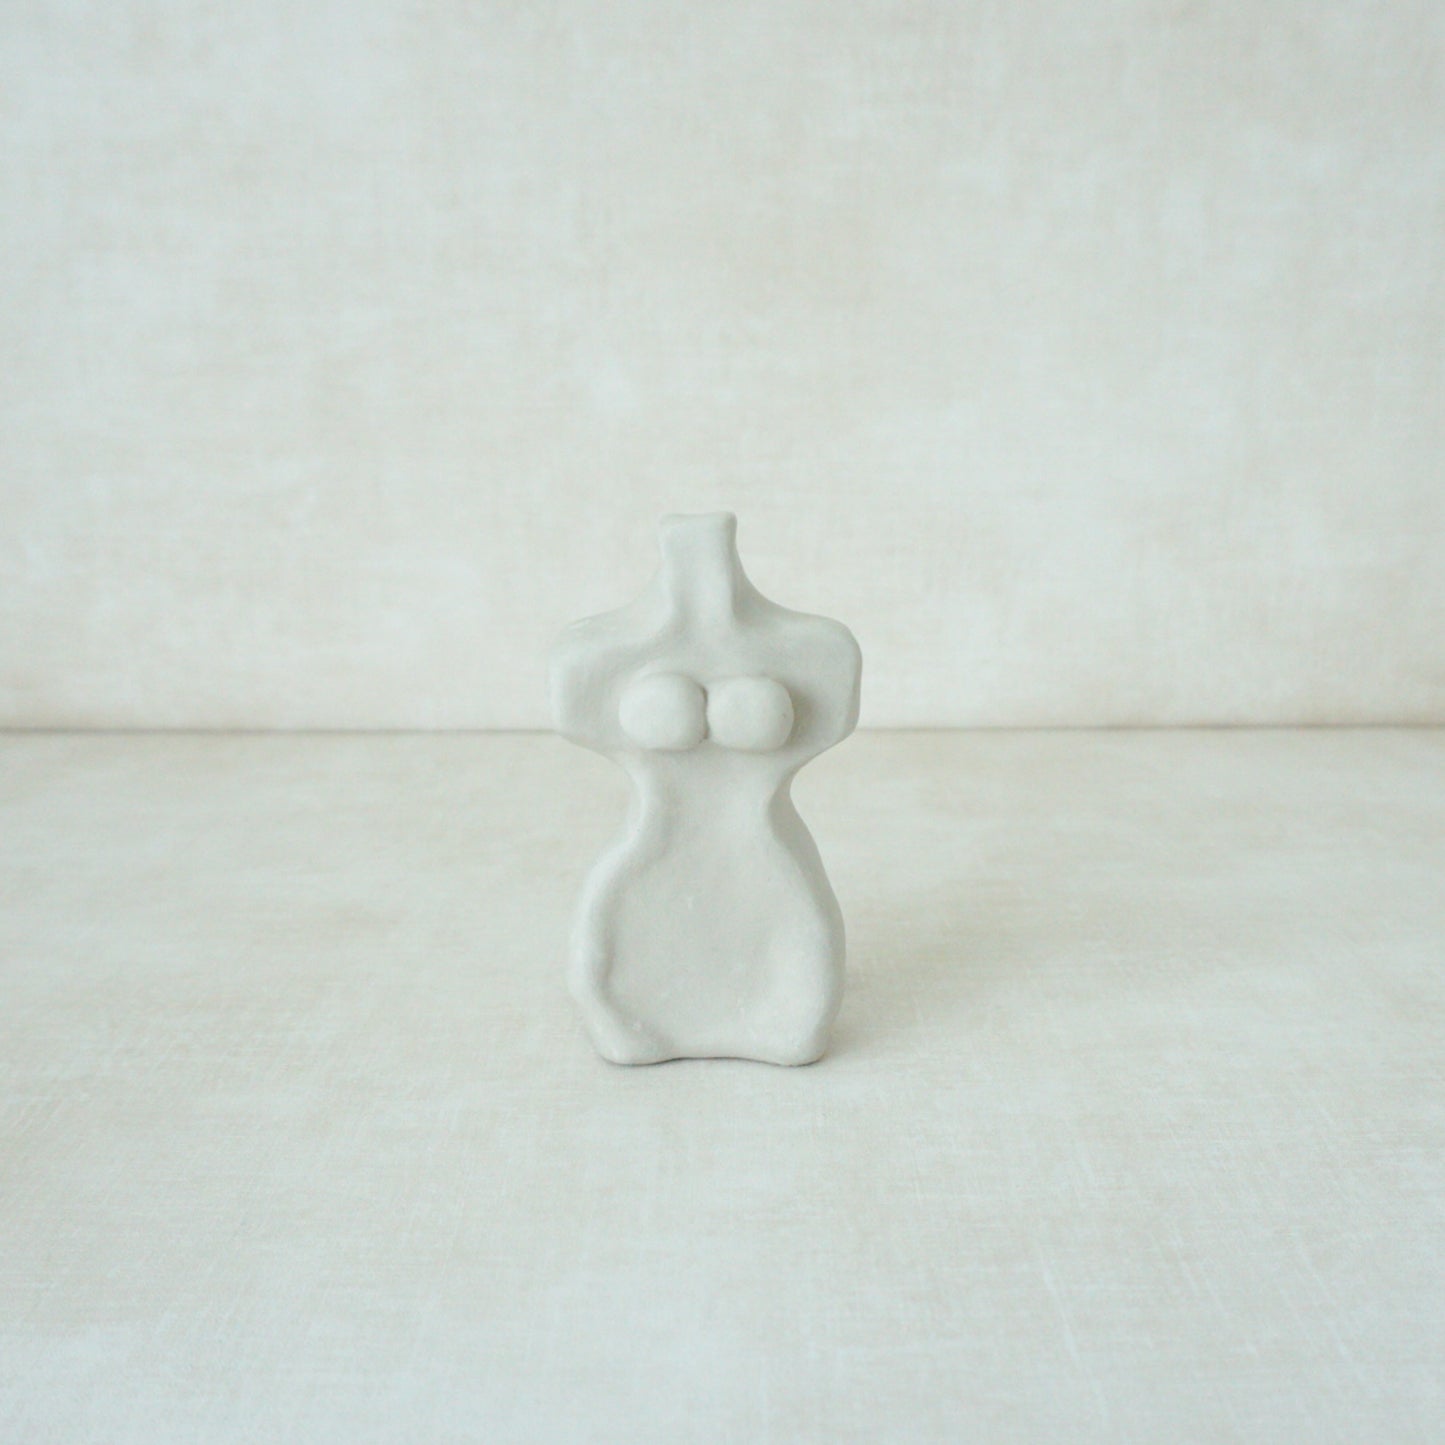 Female Form Handmade Clay Sculpture